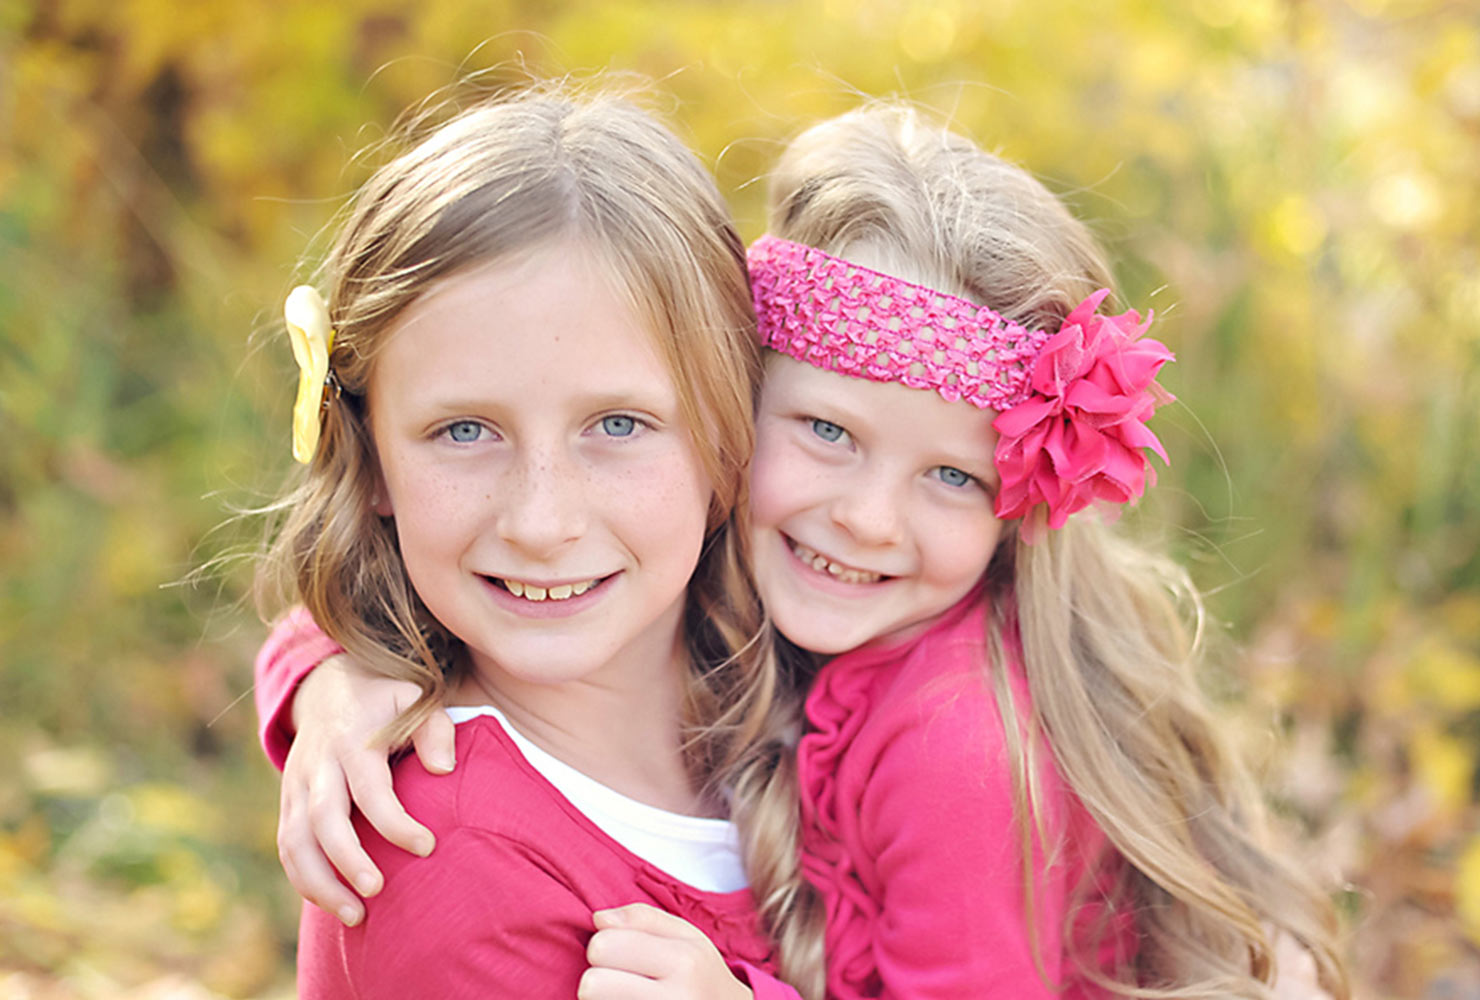 sibling photo ideas sisters in pink